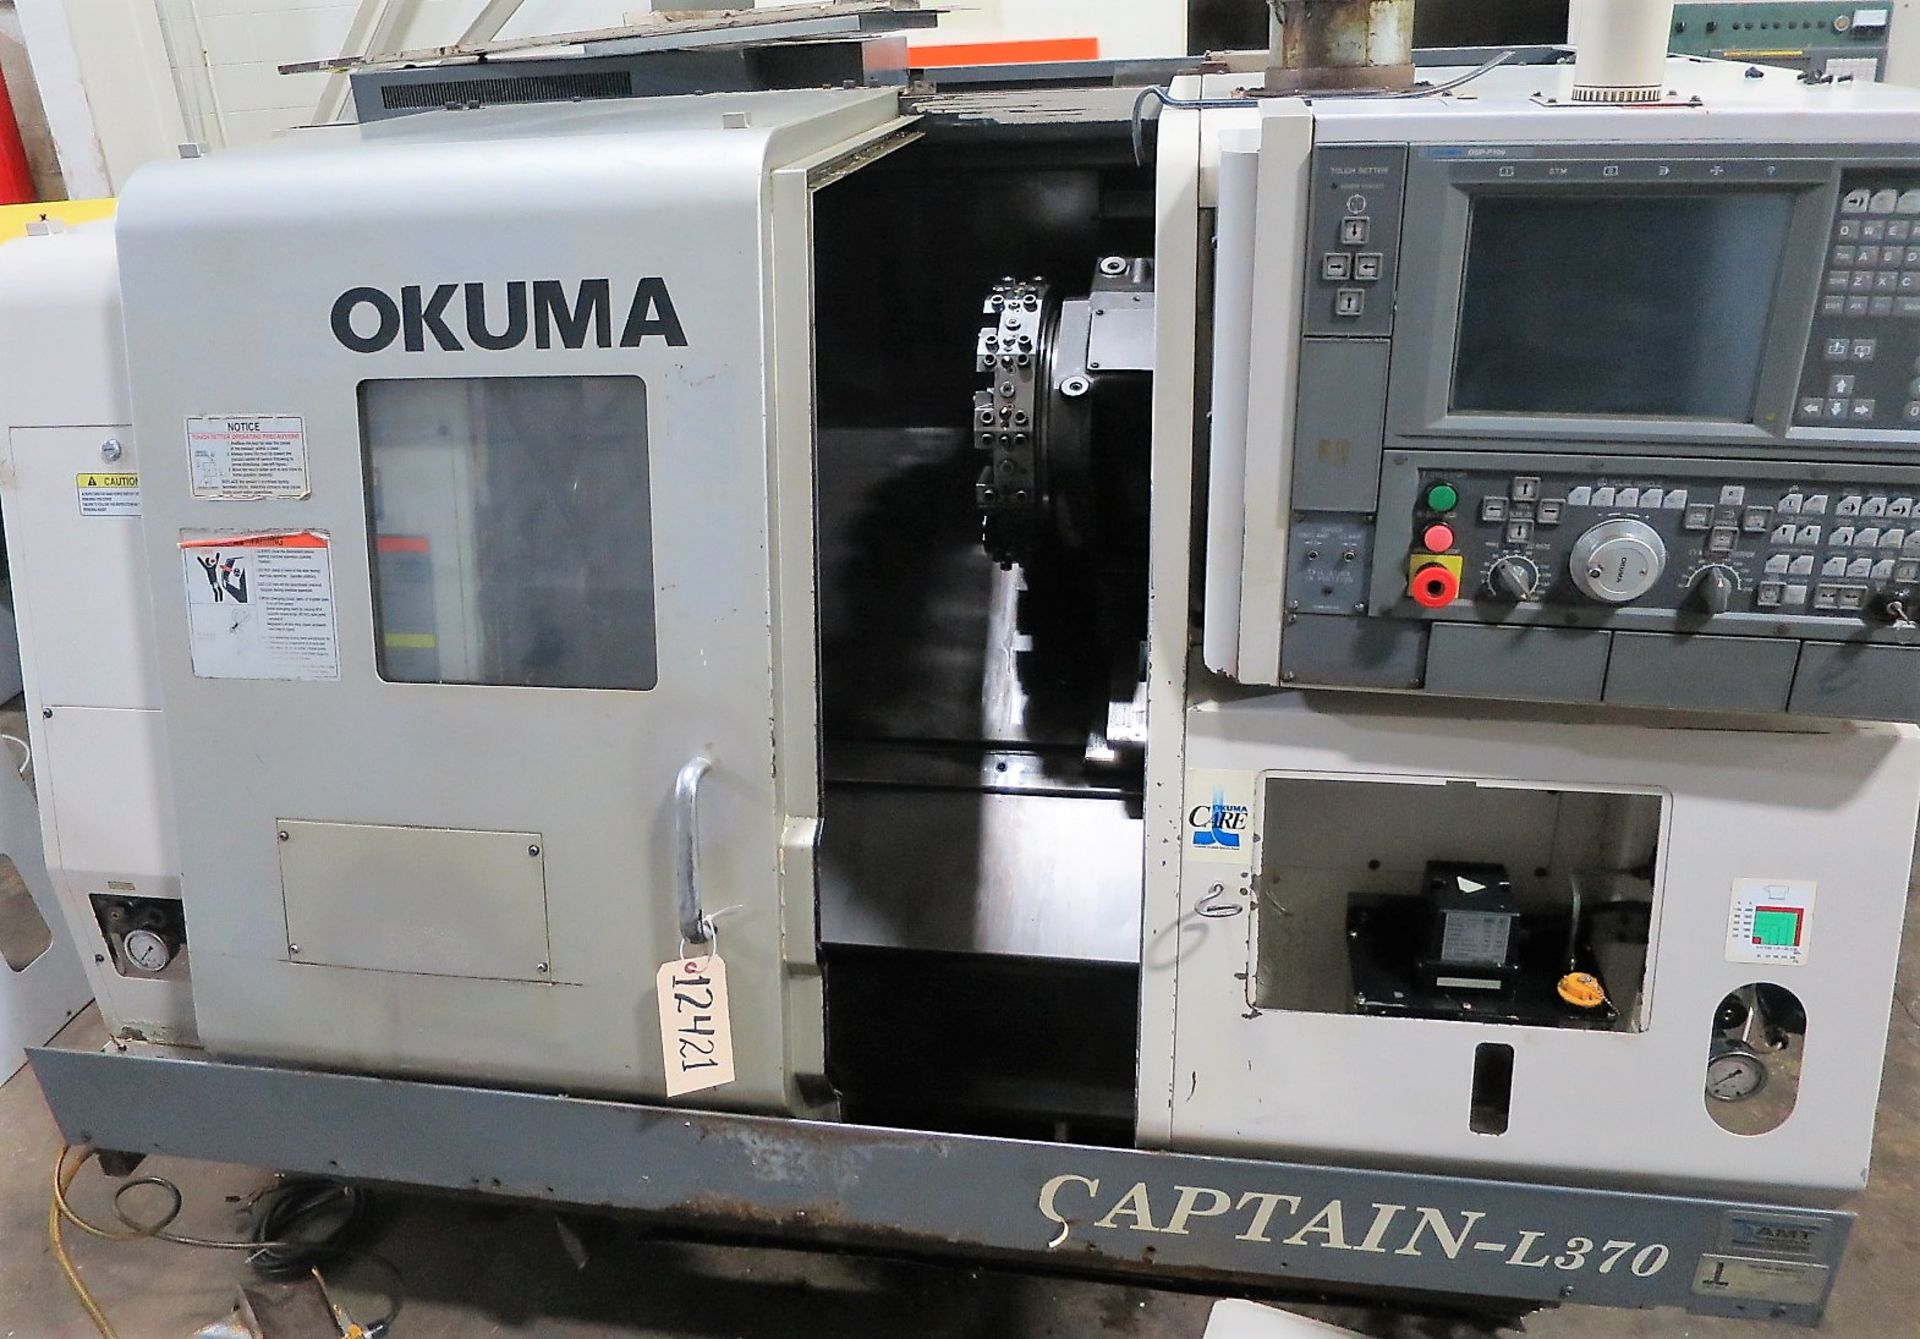 Okuma Captain L370-2-Axis CNC Turning Center Lathe, S/N 116573, New 2005